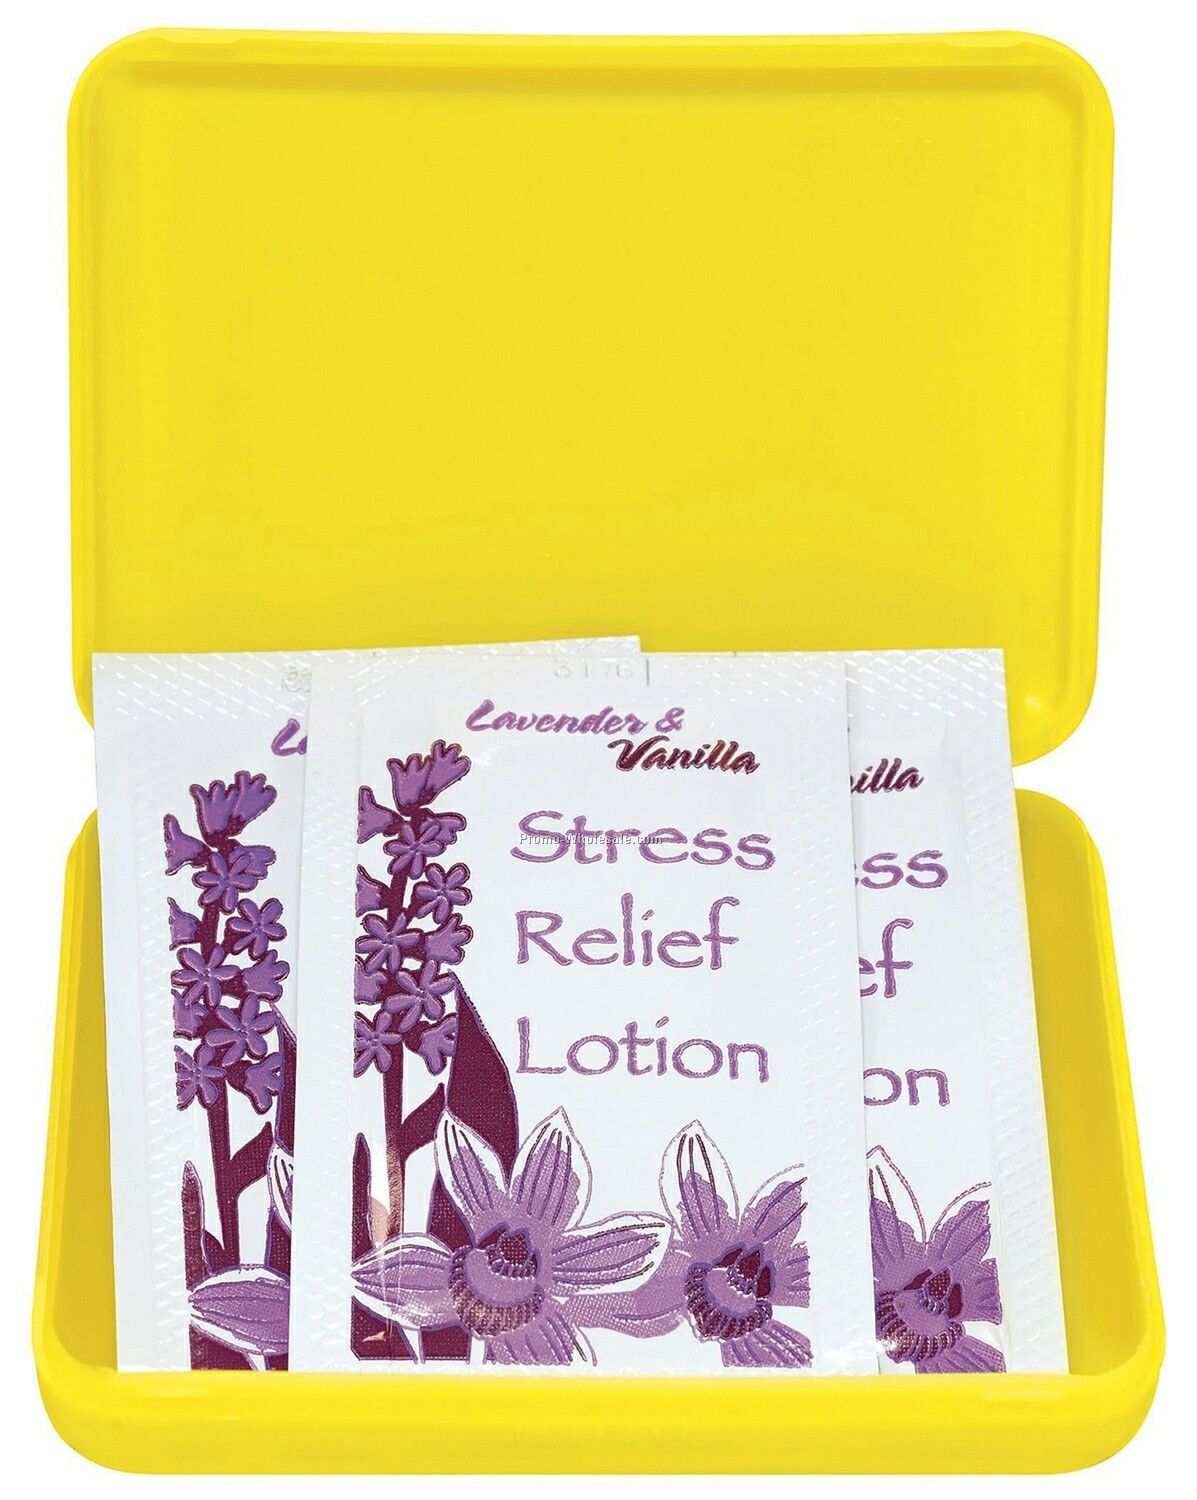 Pillowline Lavender & Vanilla Stress Relief Lotion Pocket Box